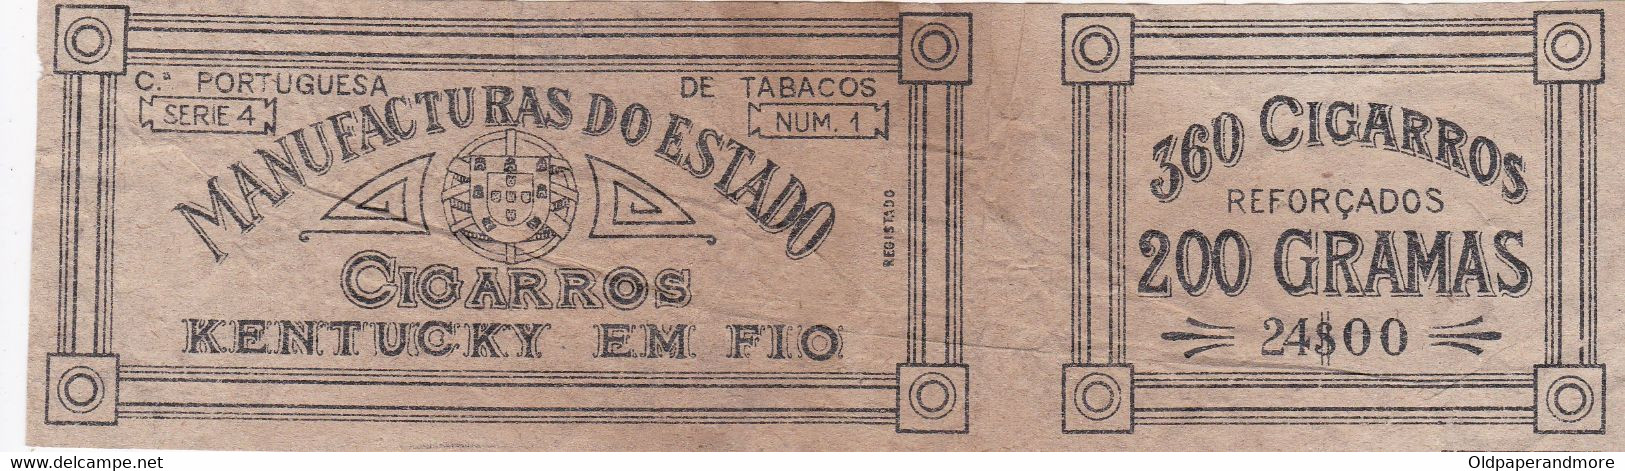 My Box 2 - PORTUGAL - LABEL - CIGARROS KENTUCKY - OLD CIGAR LABEL - TOBACCO LABEL - Etichette